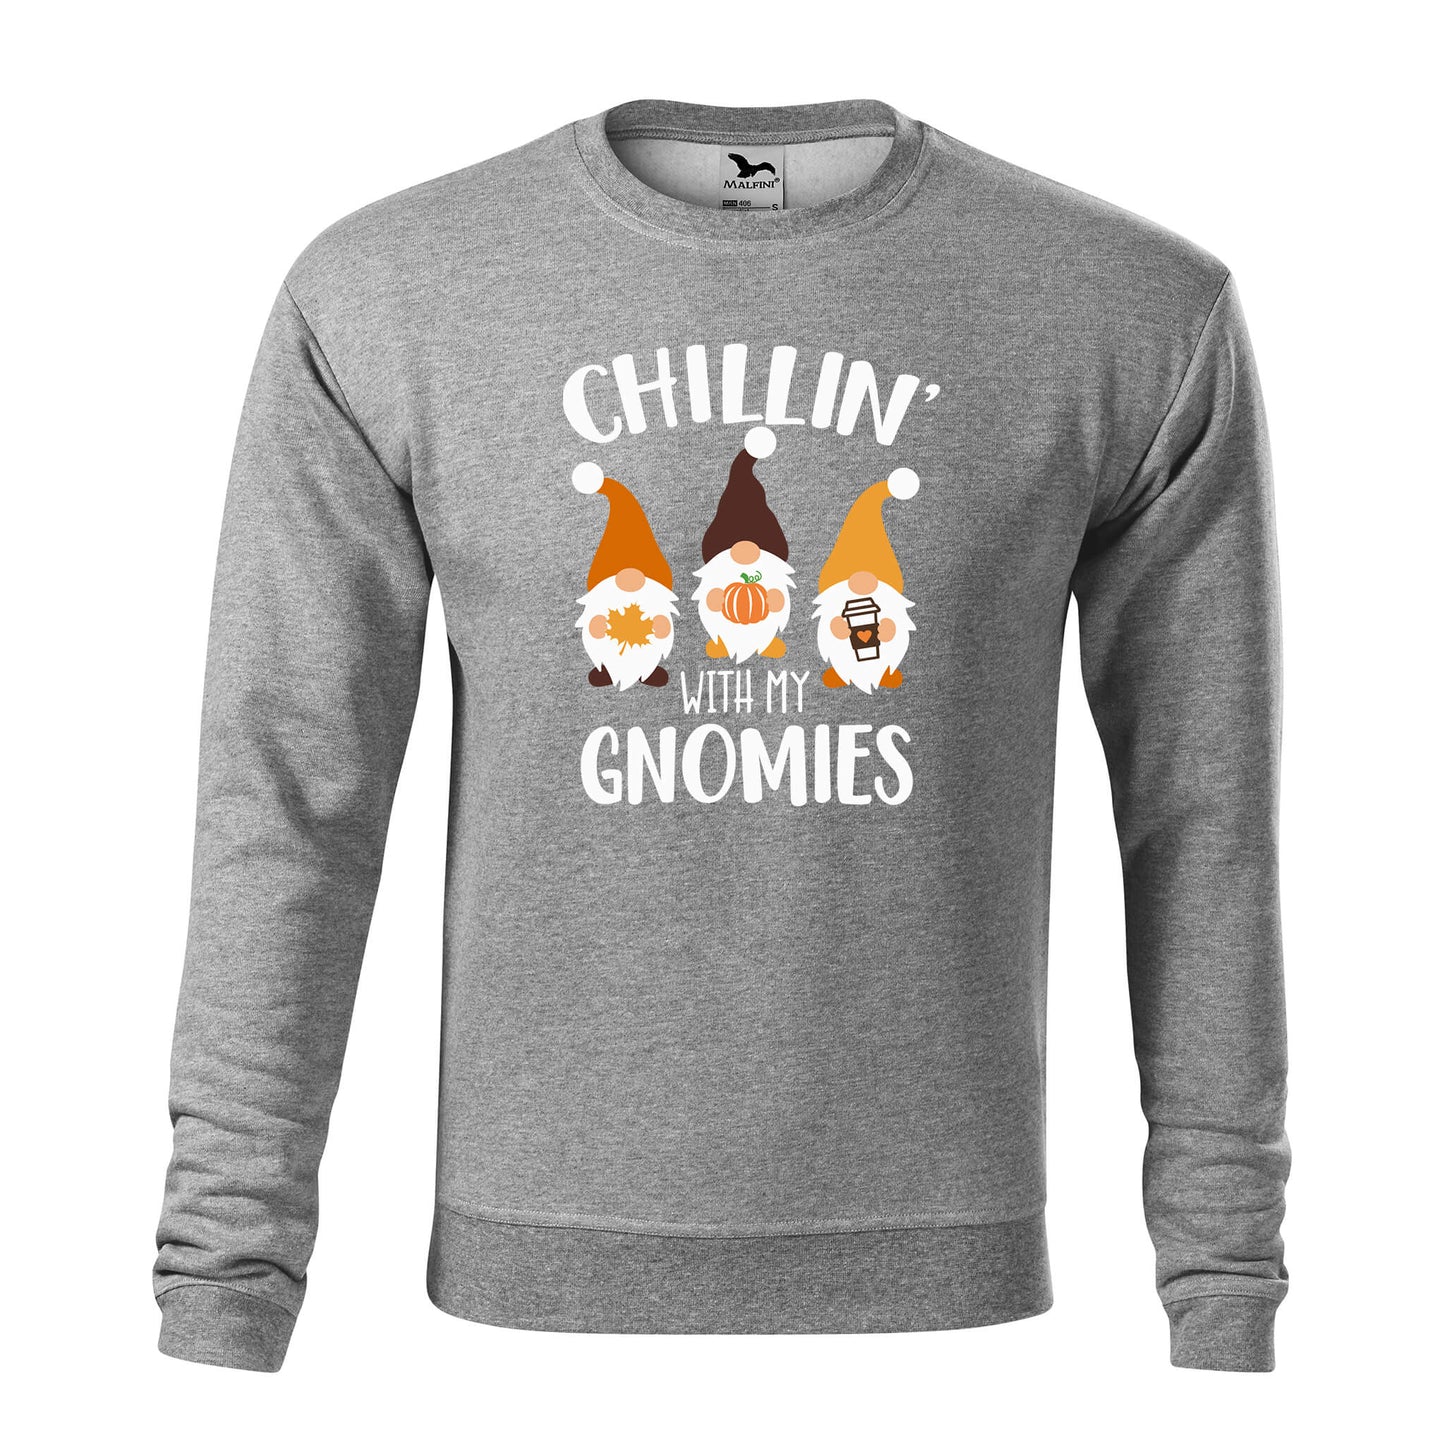 Chillin with my gnomies sweatshirt - mens